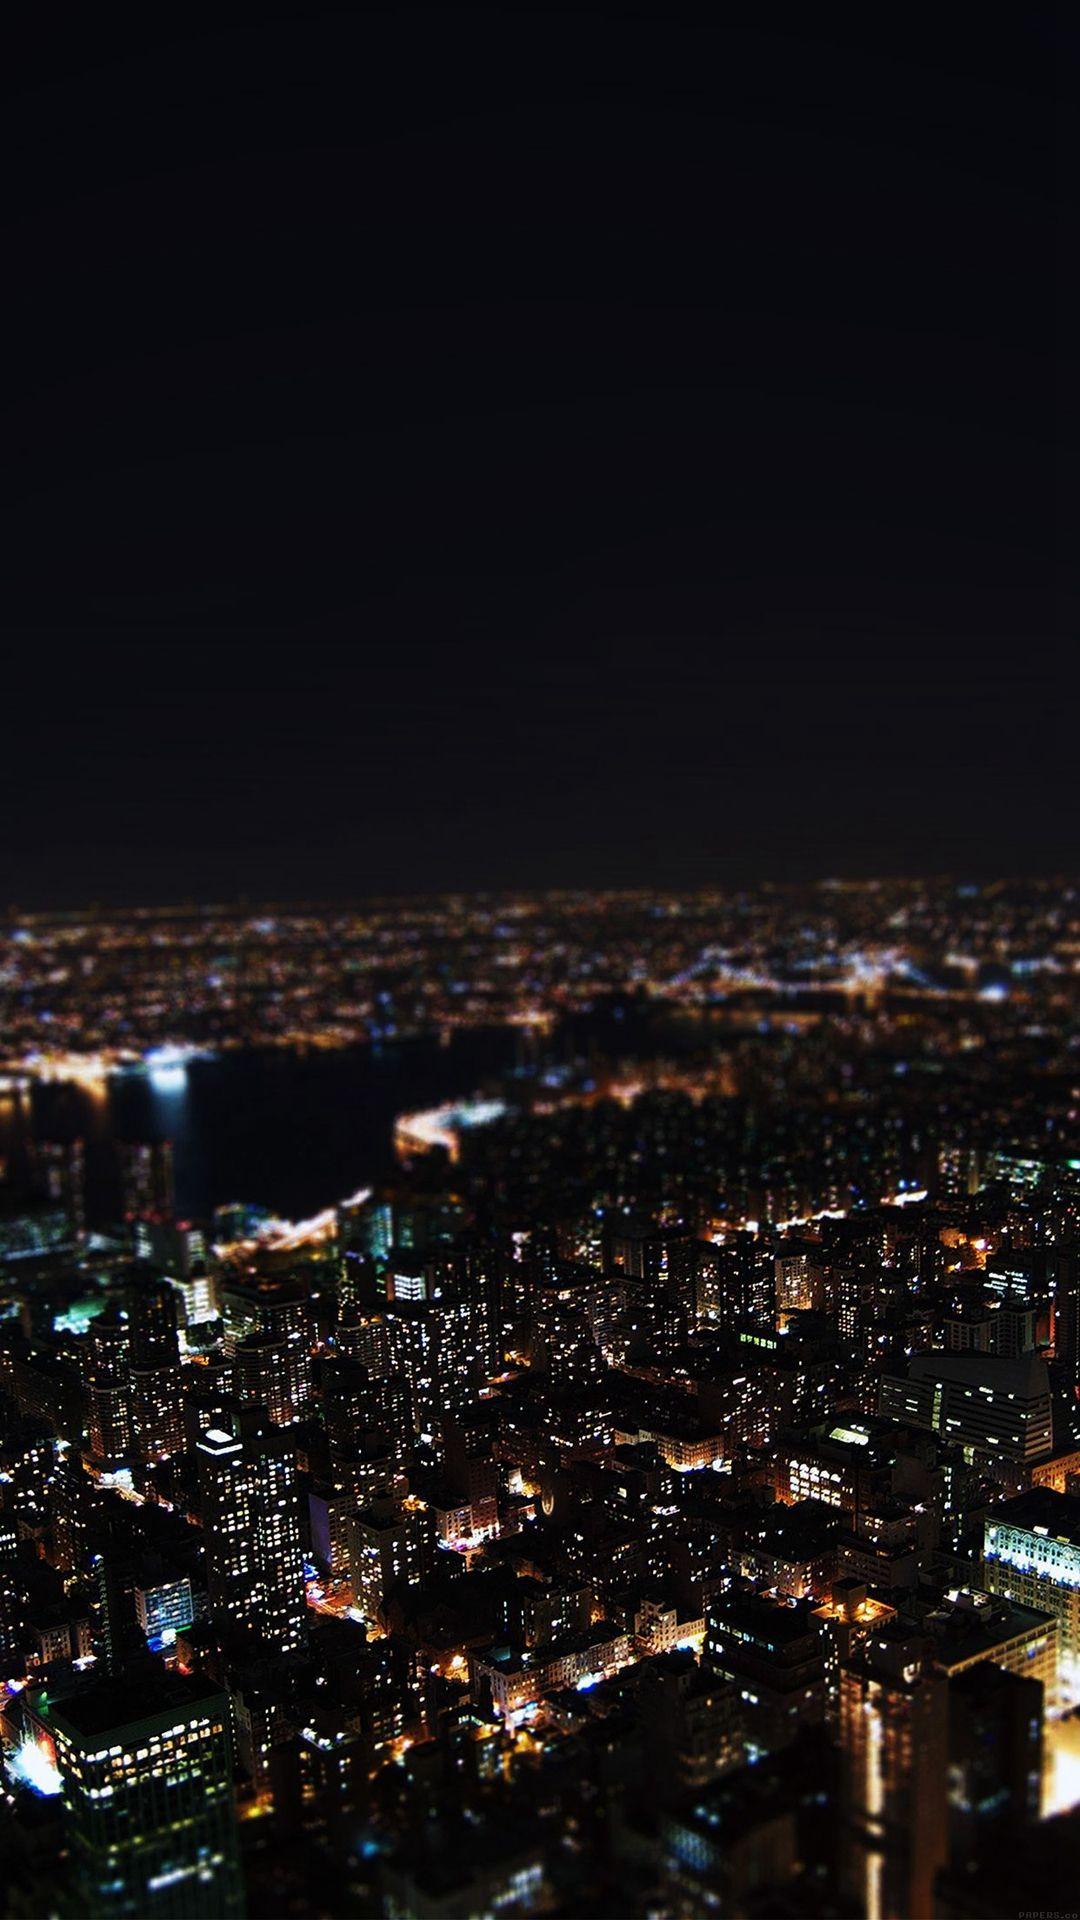 Dark Night City Building Skyview iPhone 6 wallpaper. City wallpaper, City lights wallpaper, Night landscape